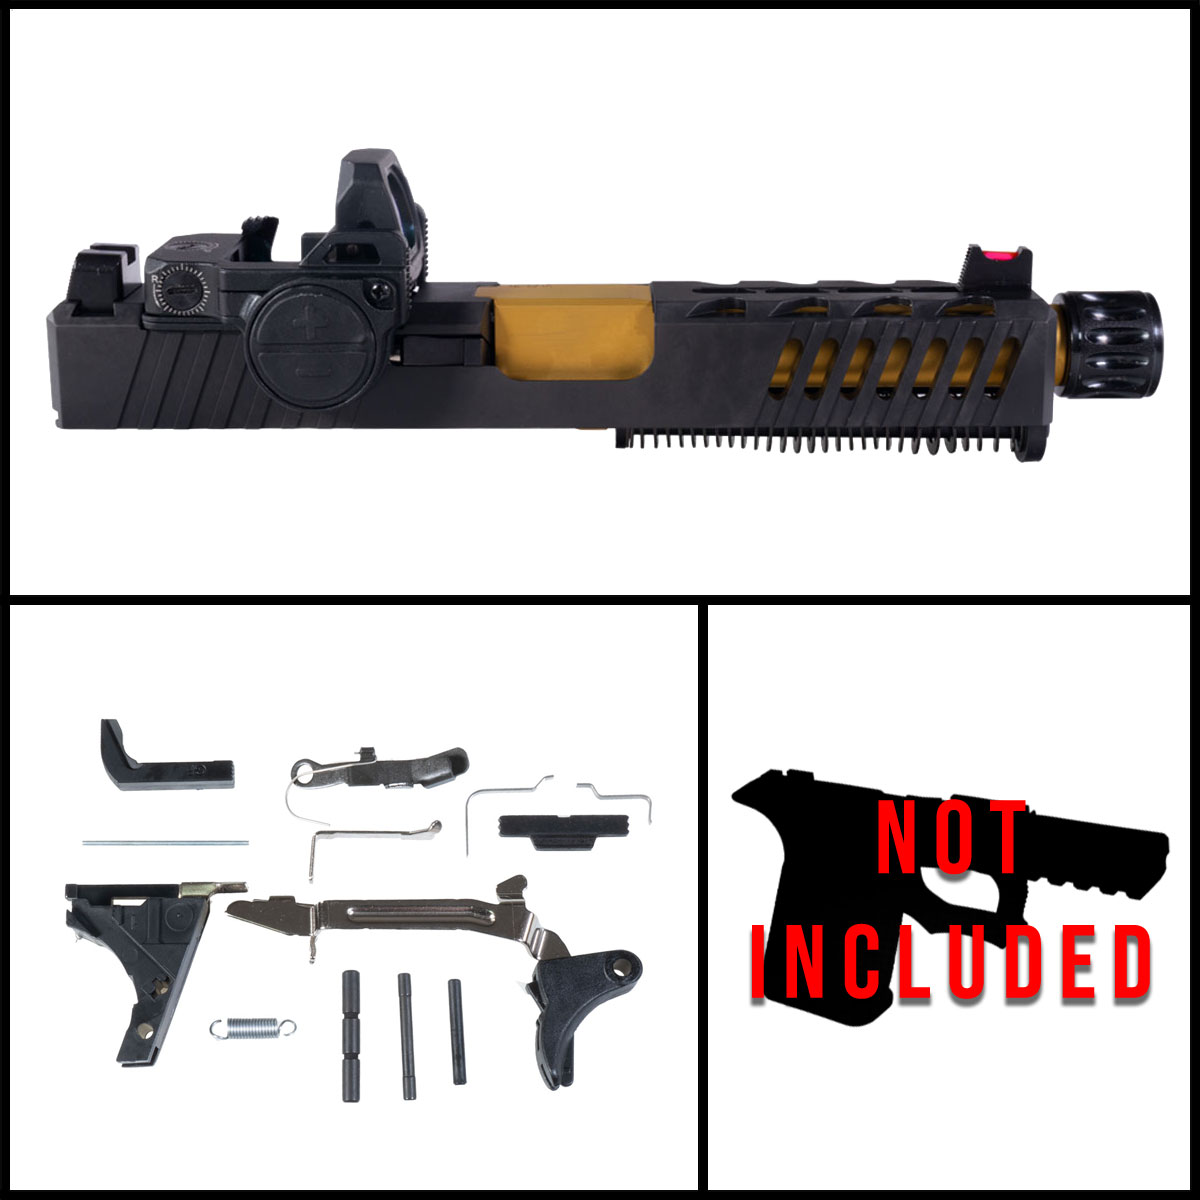 MMC 'Fovea w/ VISM FlipDot Pro' 9mm Full Pistol Build Kit (Everything Minus Frame) - Glock 19 Gen 1-3 Compatible